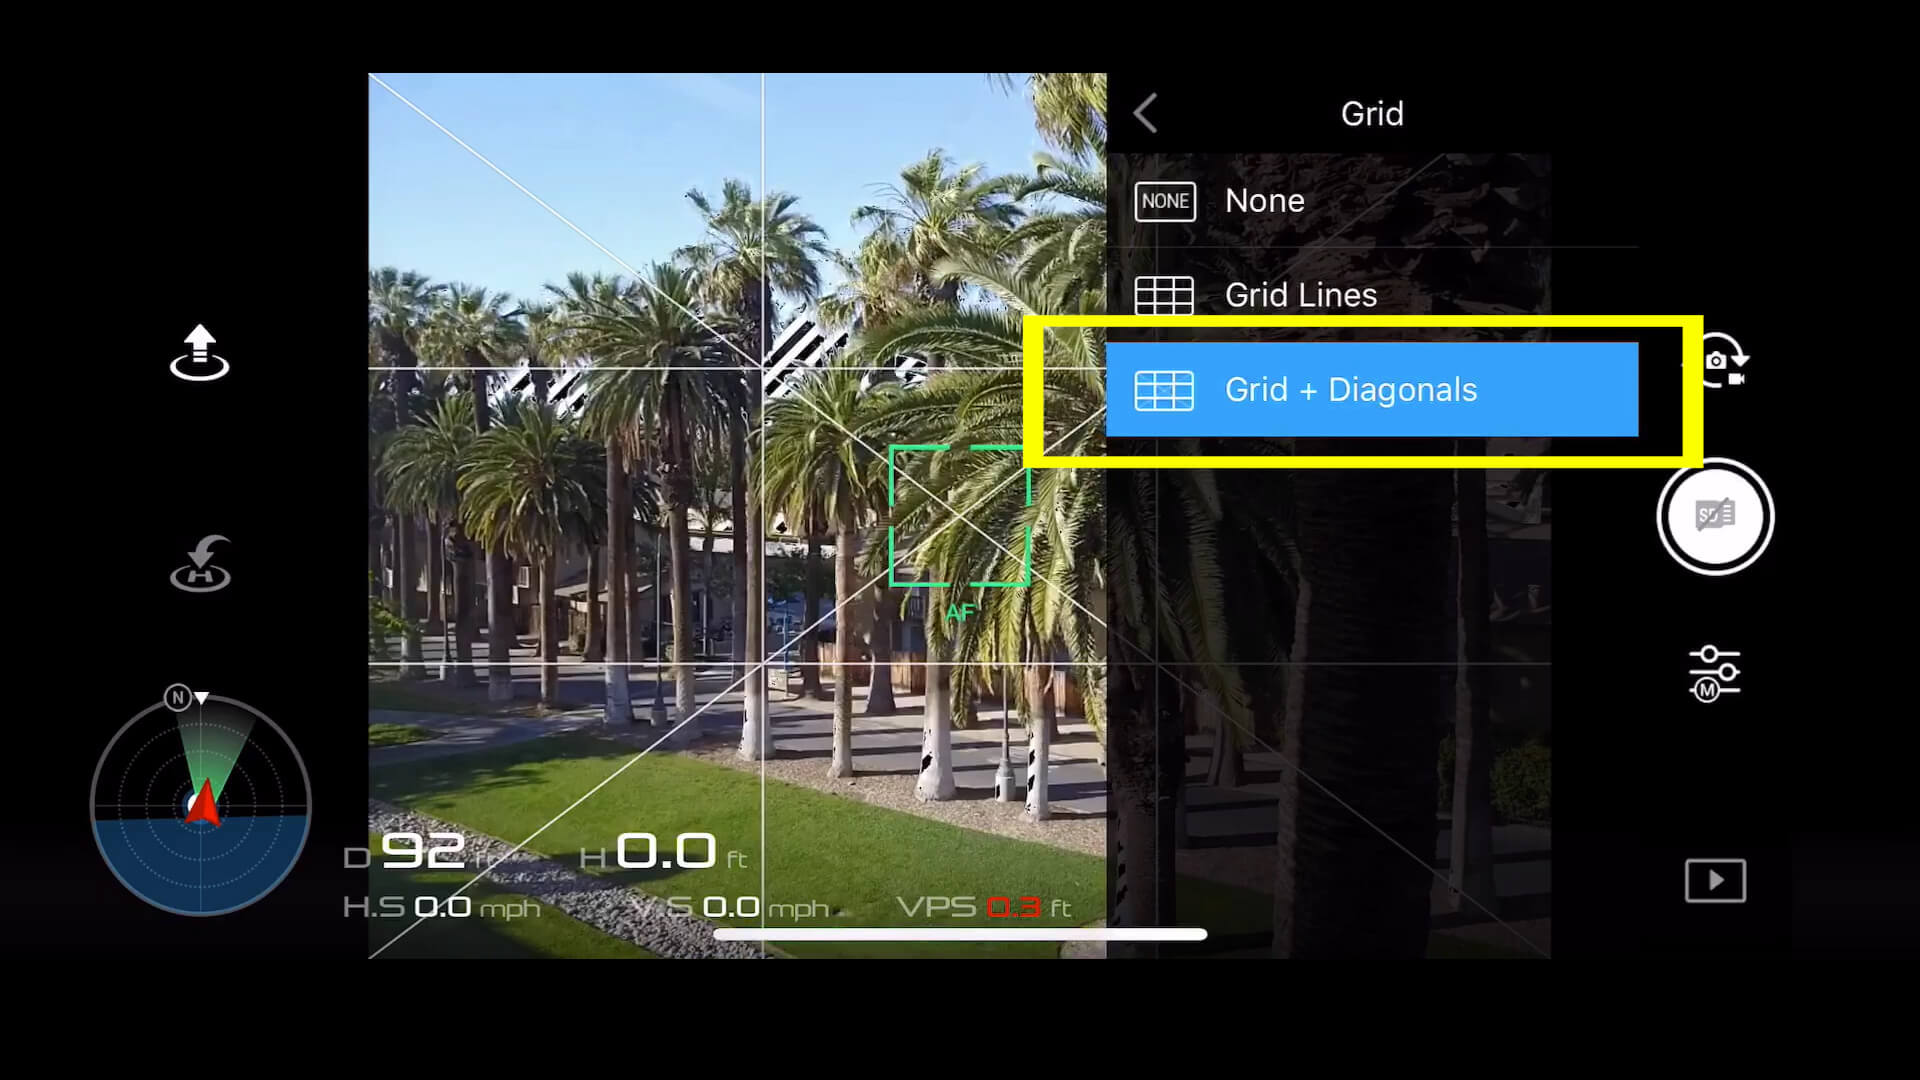 13 basic camera settings for dji drone photos - grid